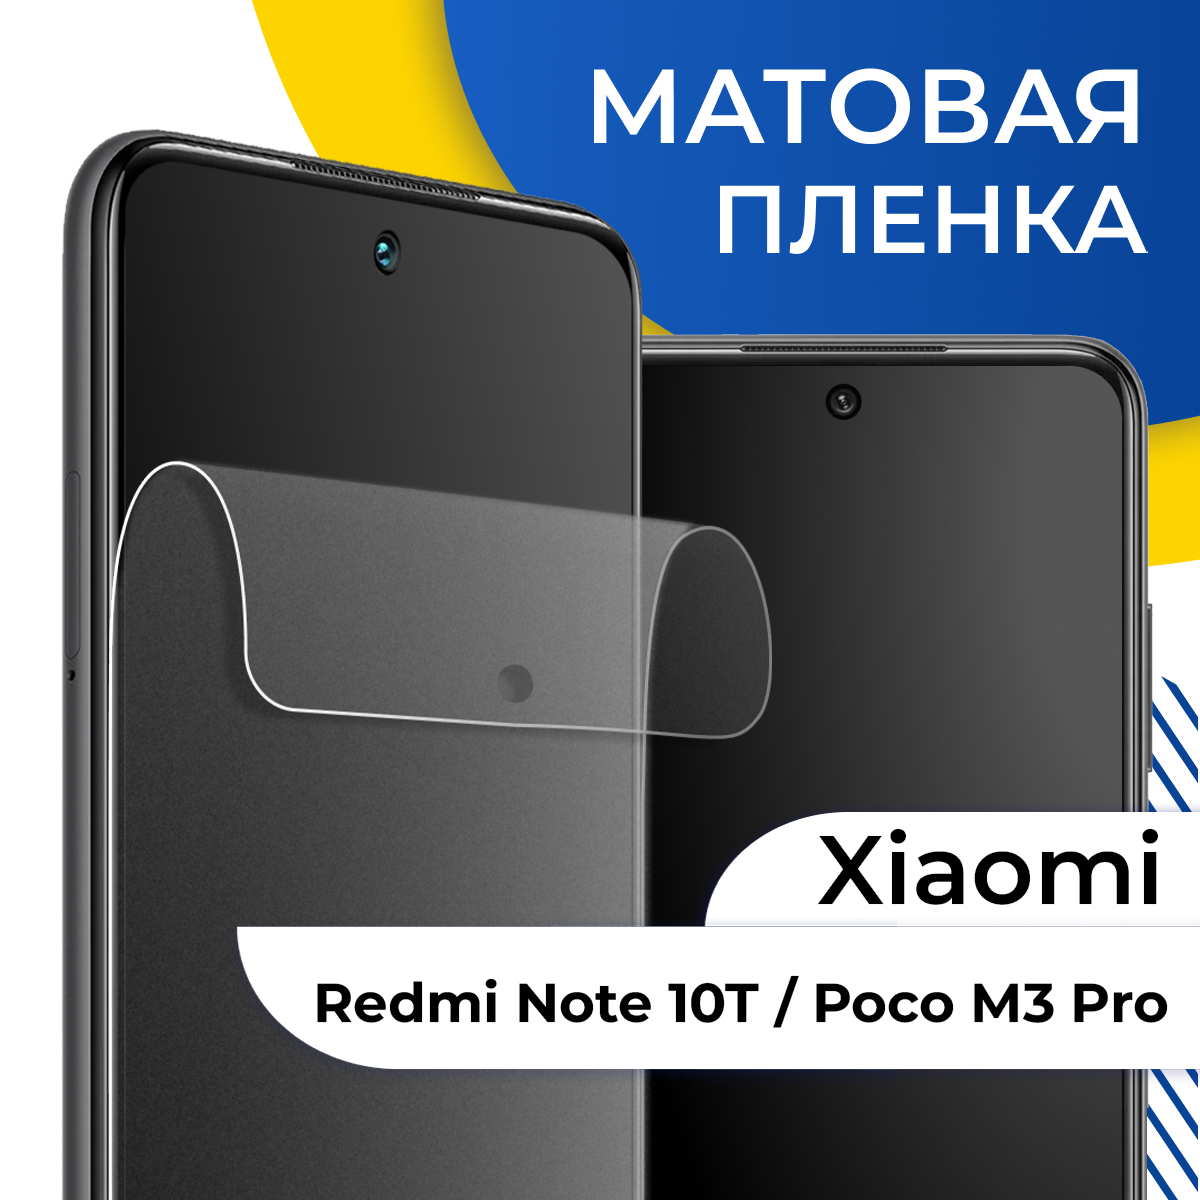 Матовая гидрогелевая пленка для телефона Xiaomi Redmi Note 10T и Poco M3 Pro / Самовосстанавливающаяся пленка на Сяоми Редми Нот 10Т и Поко М3 Про